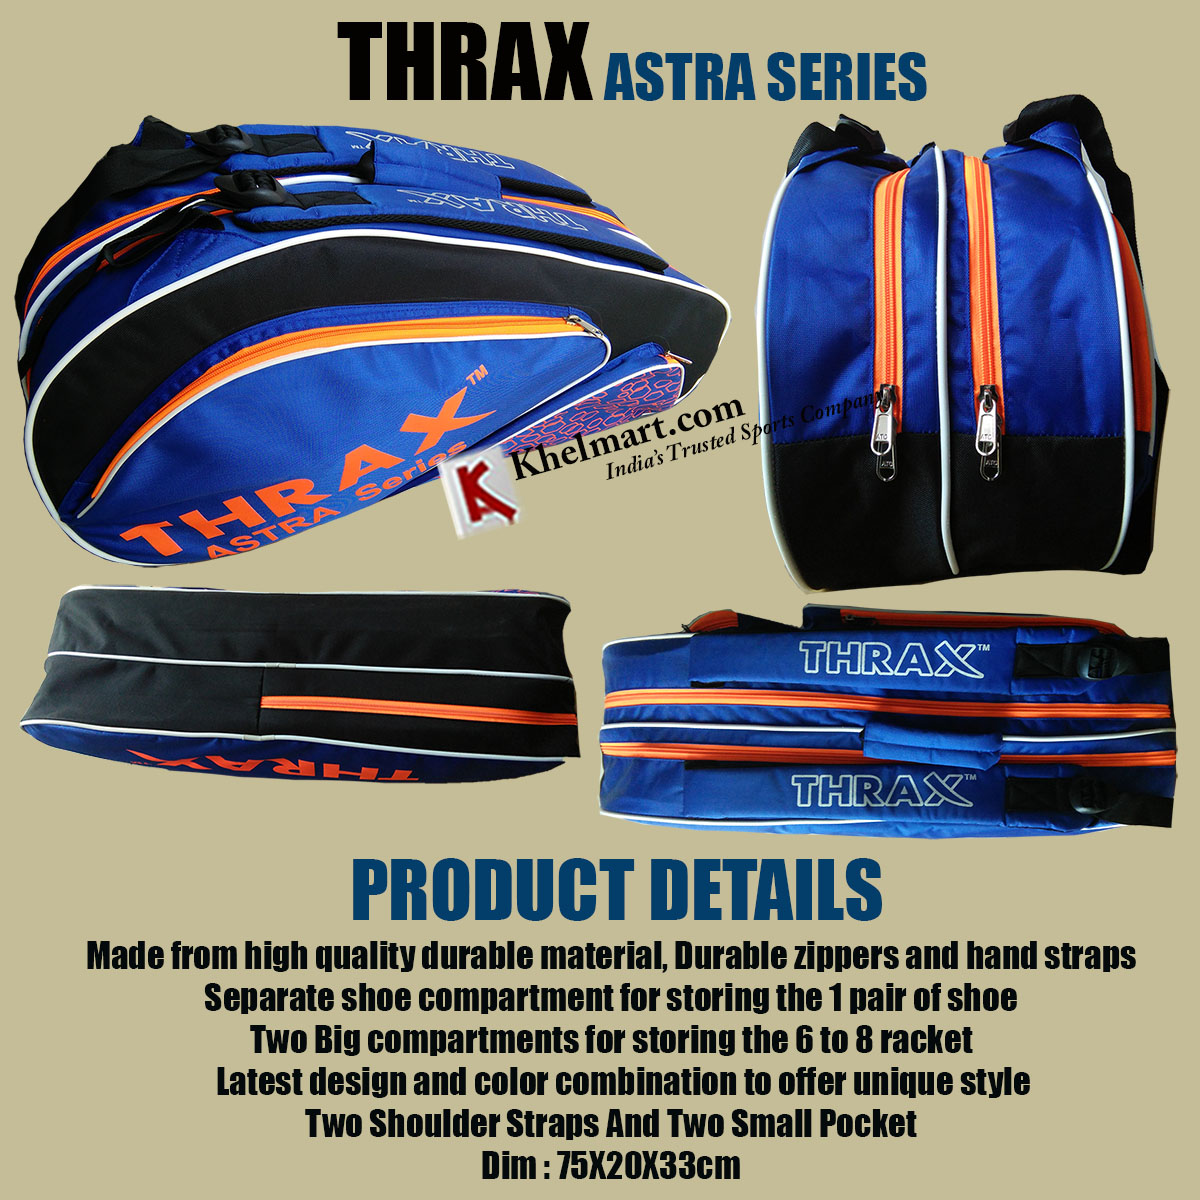 Thrax_Astra_Series_Badminton_kit_Bag.jpg